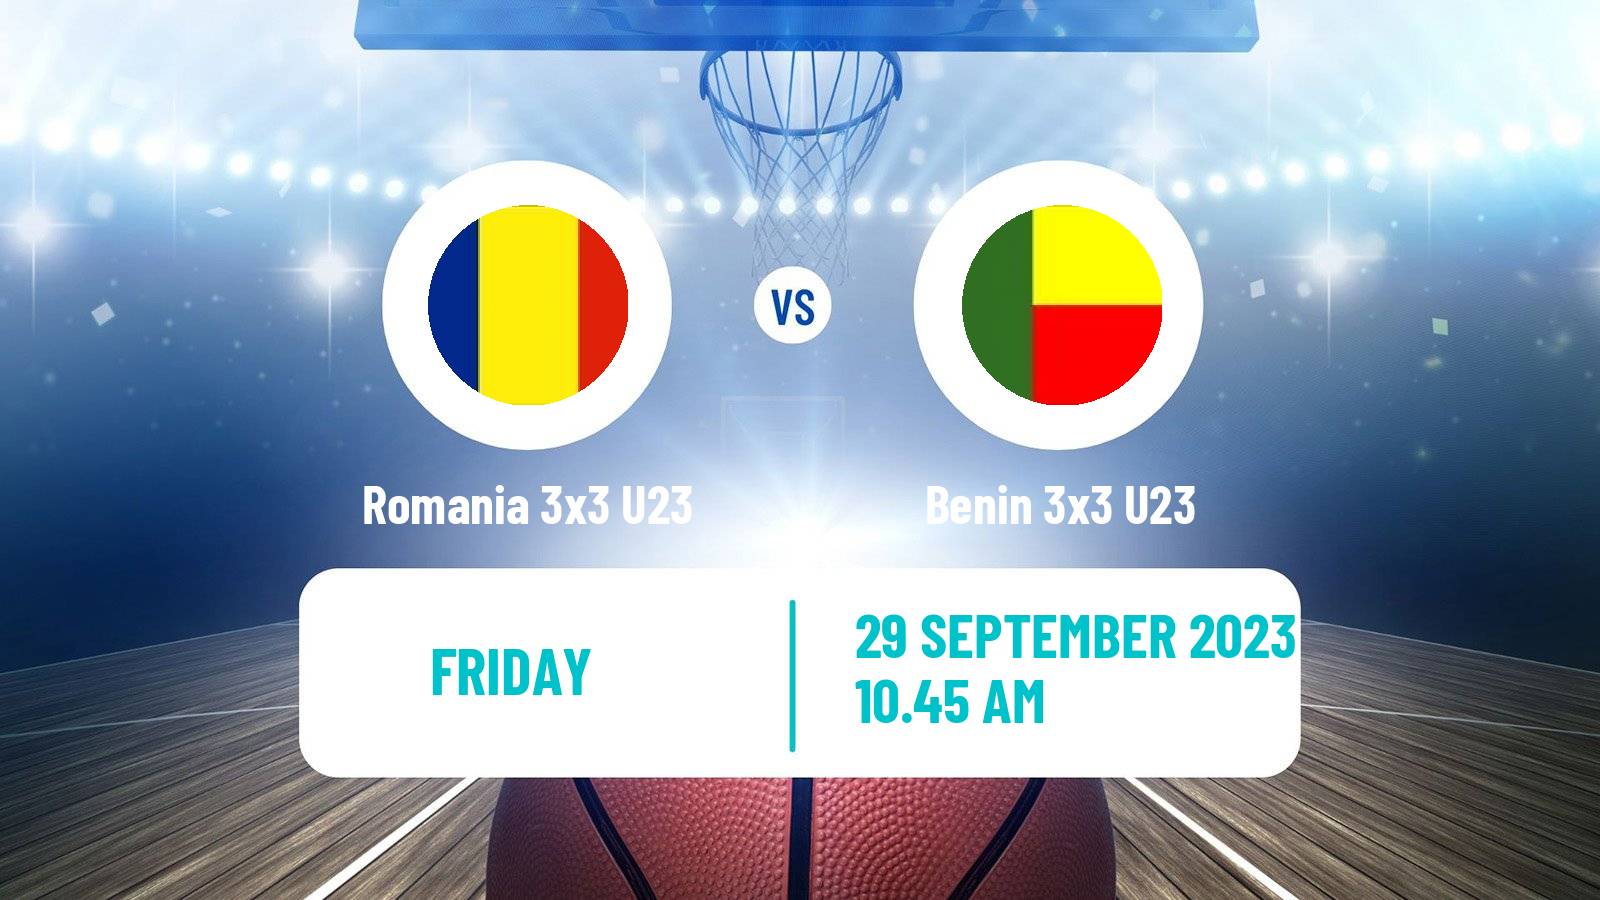 Basketball World Cup Basketball 3x3 U23 Romania 3x3 U23 - Benin 3x3 U23